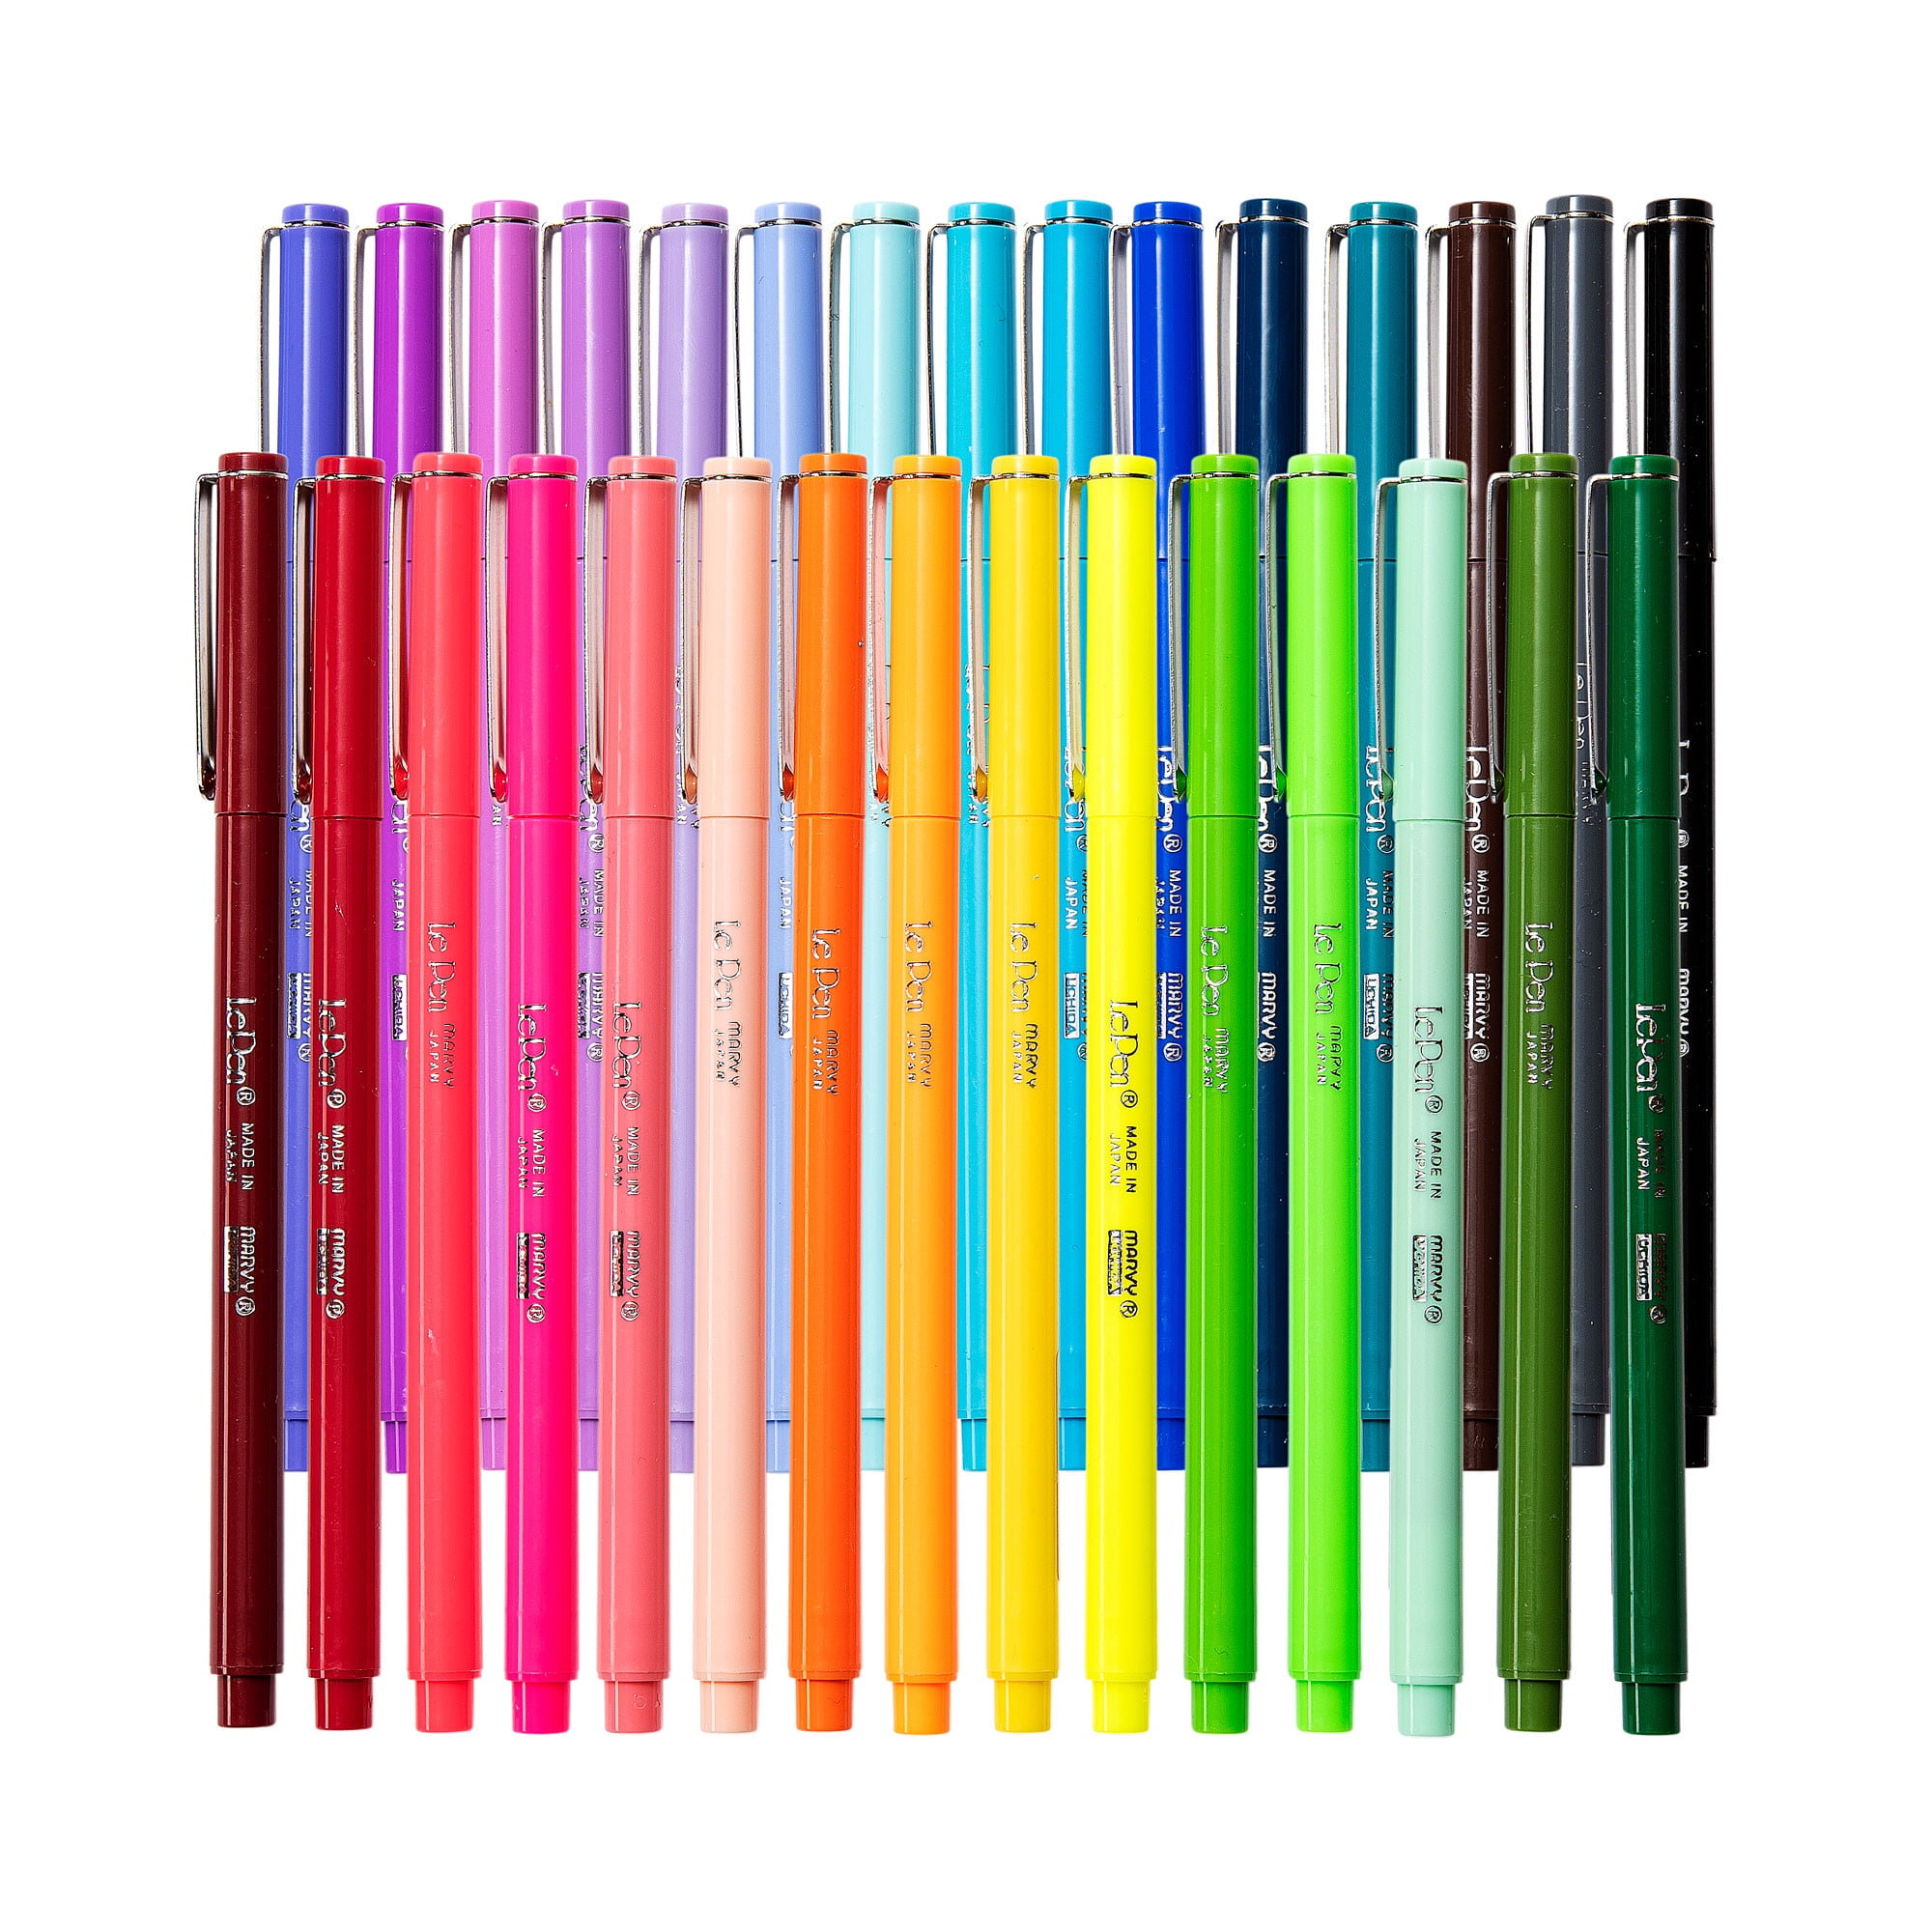 Uchida Of America 4300-10C 10-Piece 0.3 Point Size Le Pen Drawing Pen Set,  Blue, Orange, Lavender, Pink, Light Blue